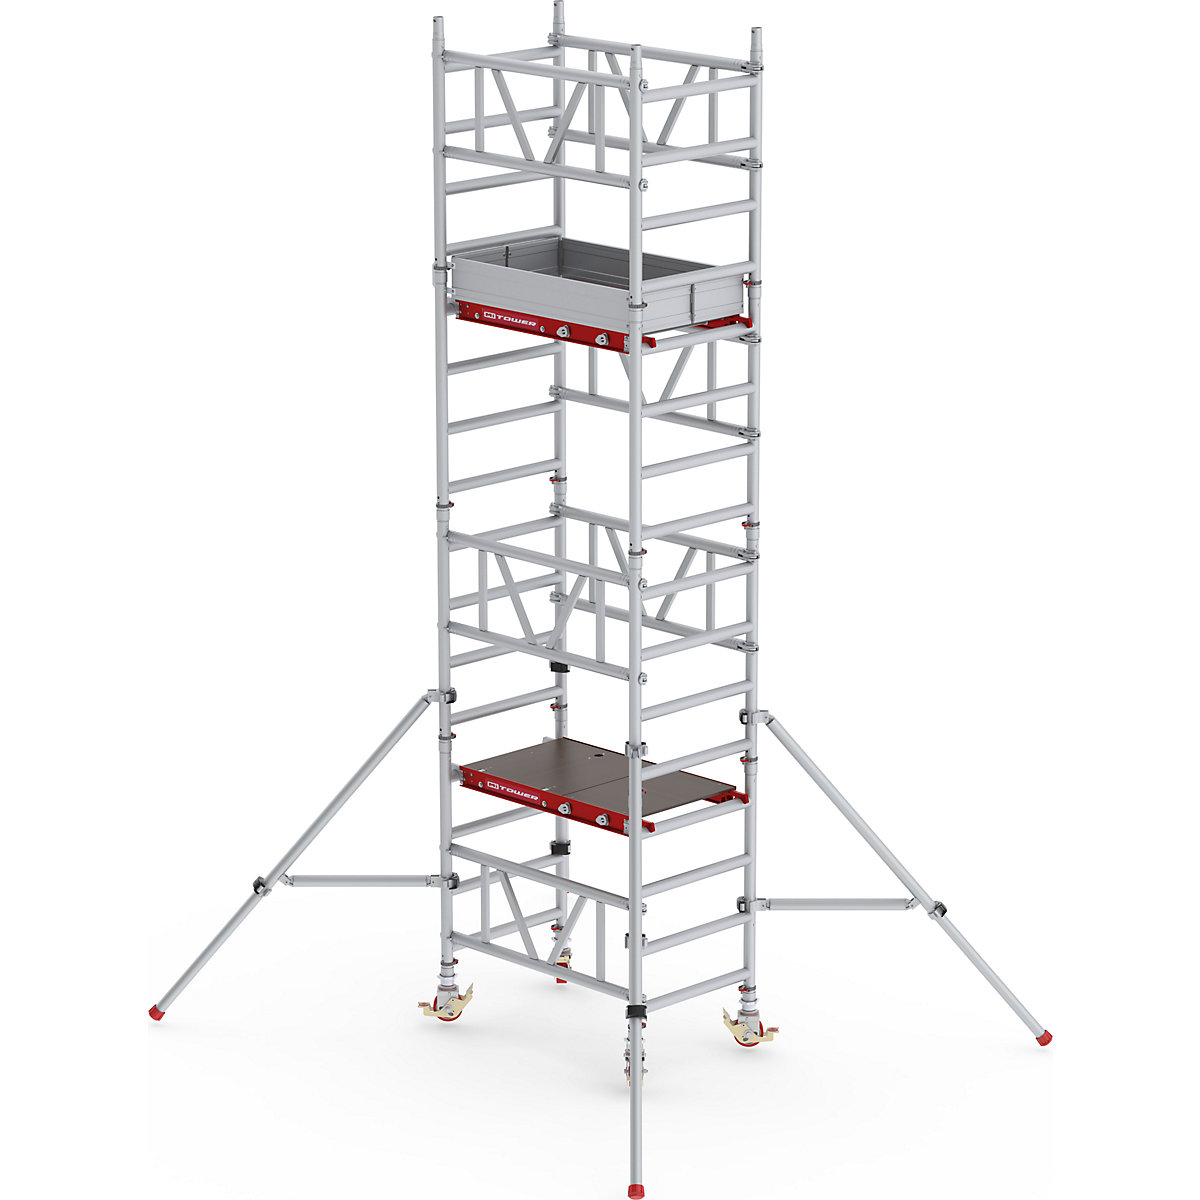 Pomična skela za brzo sastavljanje MiTOWER Standard – Altrex, drvena platforma, DxŠ 1200 x 750 mm, radna visina 5 m-24